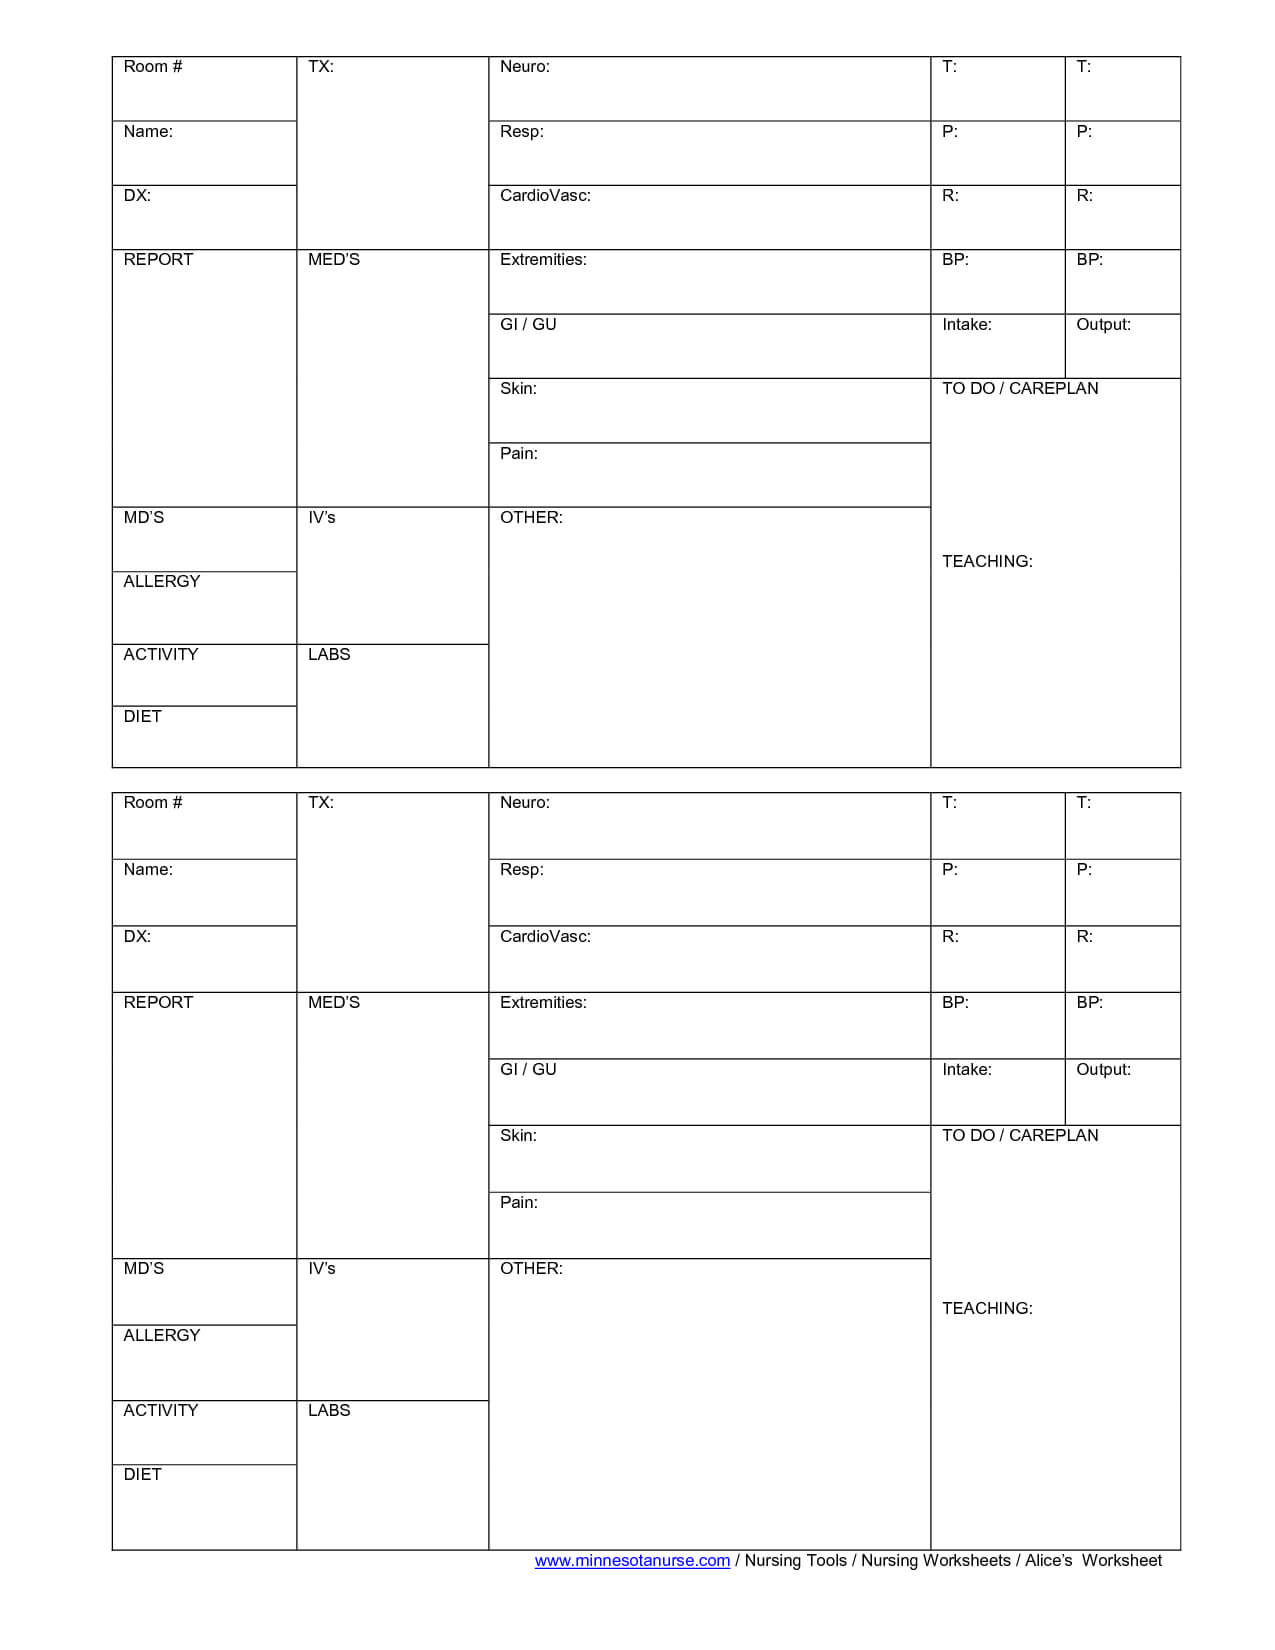 Blank Nursing Report Sheets For Newborns | Nursing Patient Pertaining To Nursing Report Sheet Templates